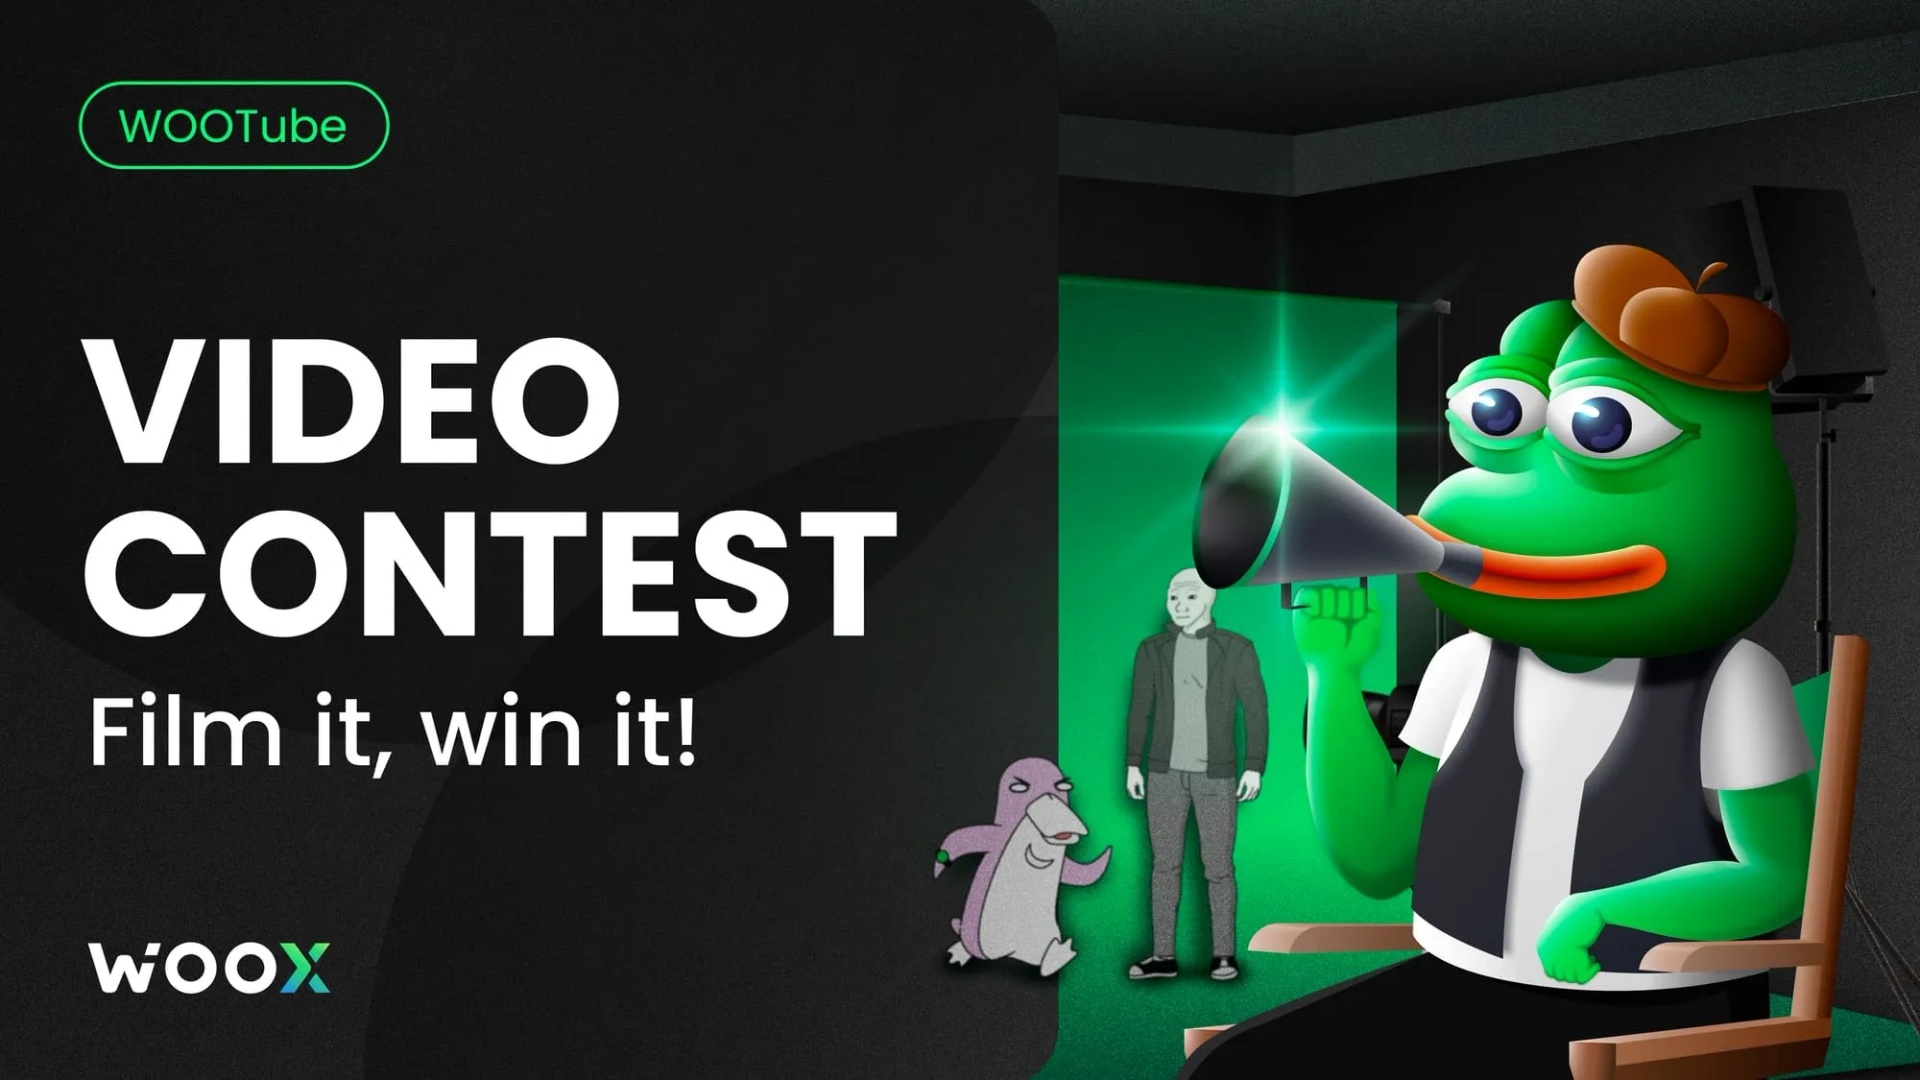 WOOTube 影片競賽 — 立即參與，瓜分 31,500 $WOO 獎金池！